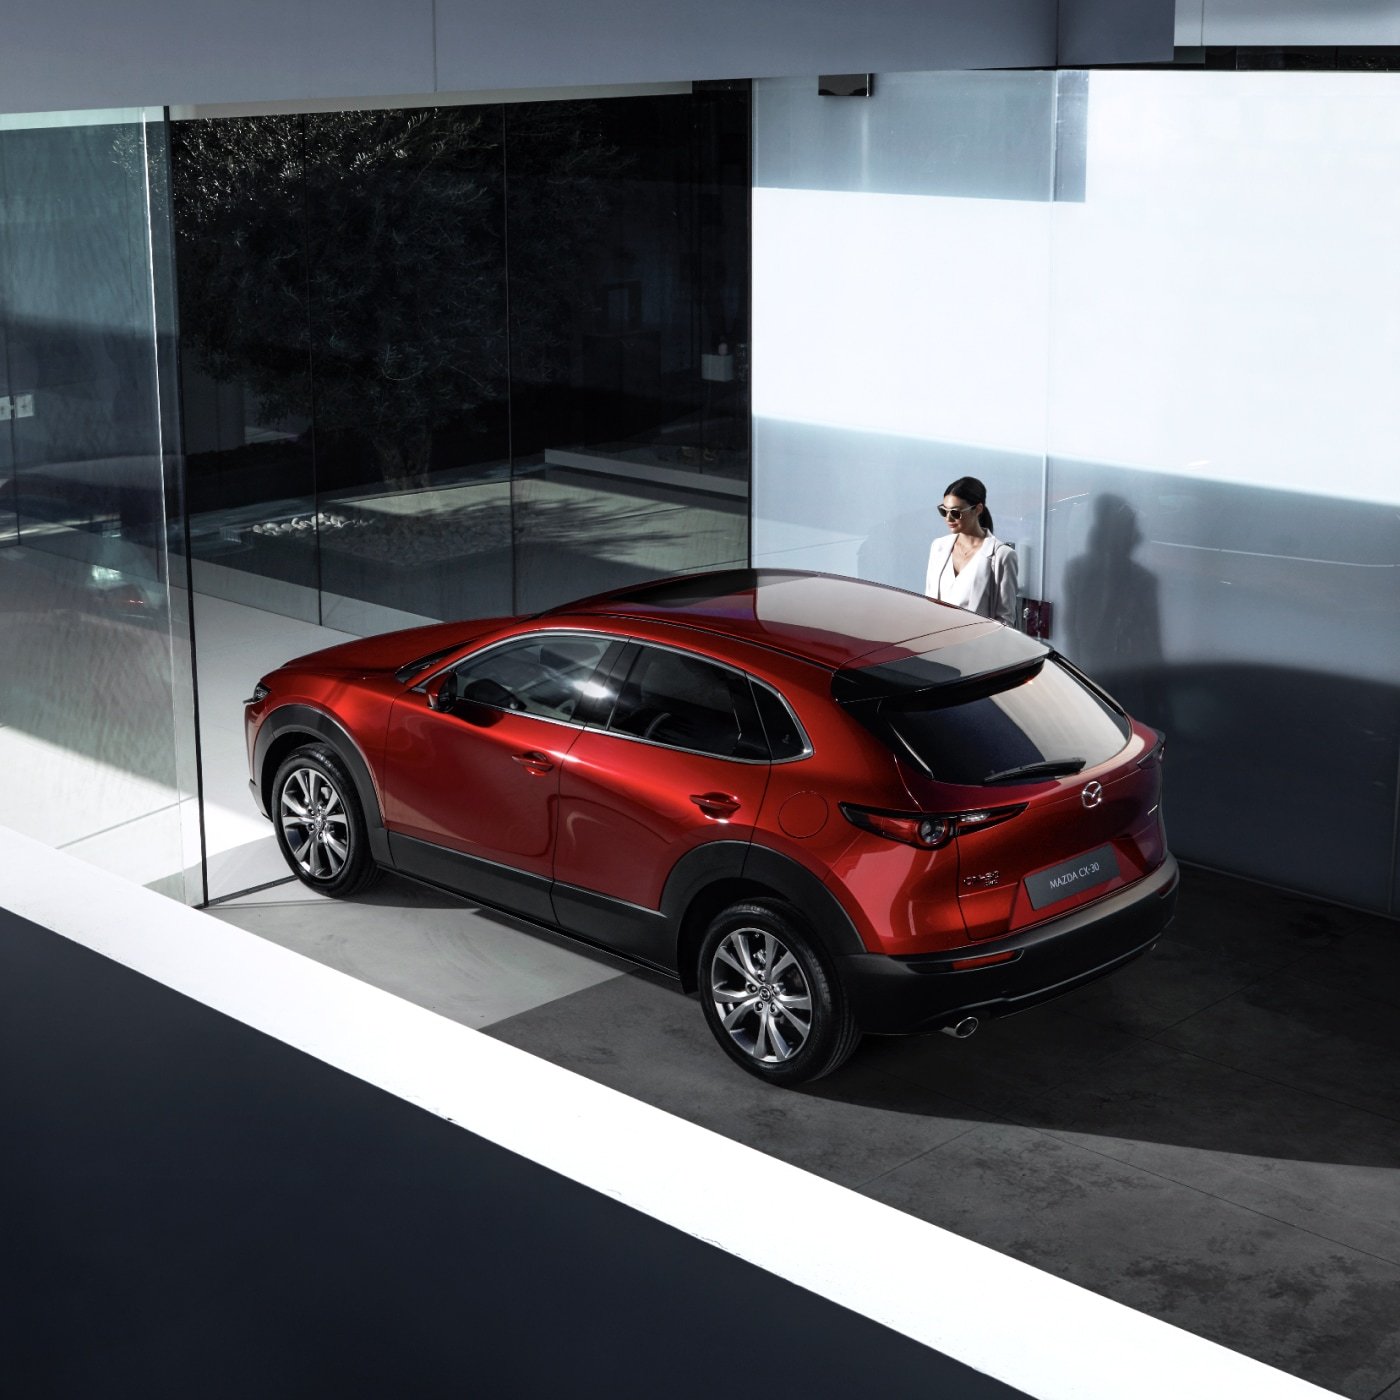 2020 Mazda CX-30 Test Drive, Expert Reviews